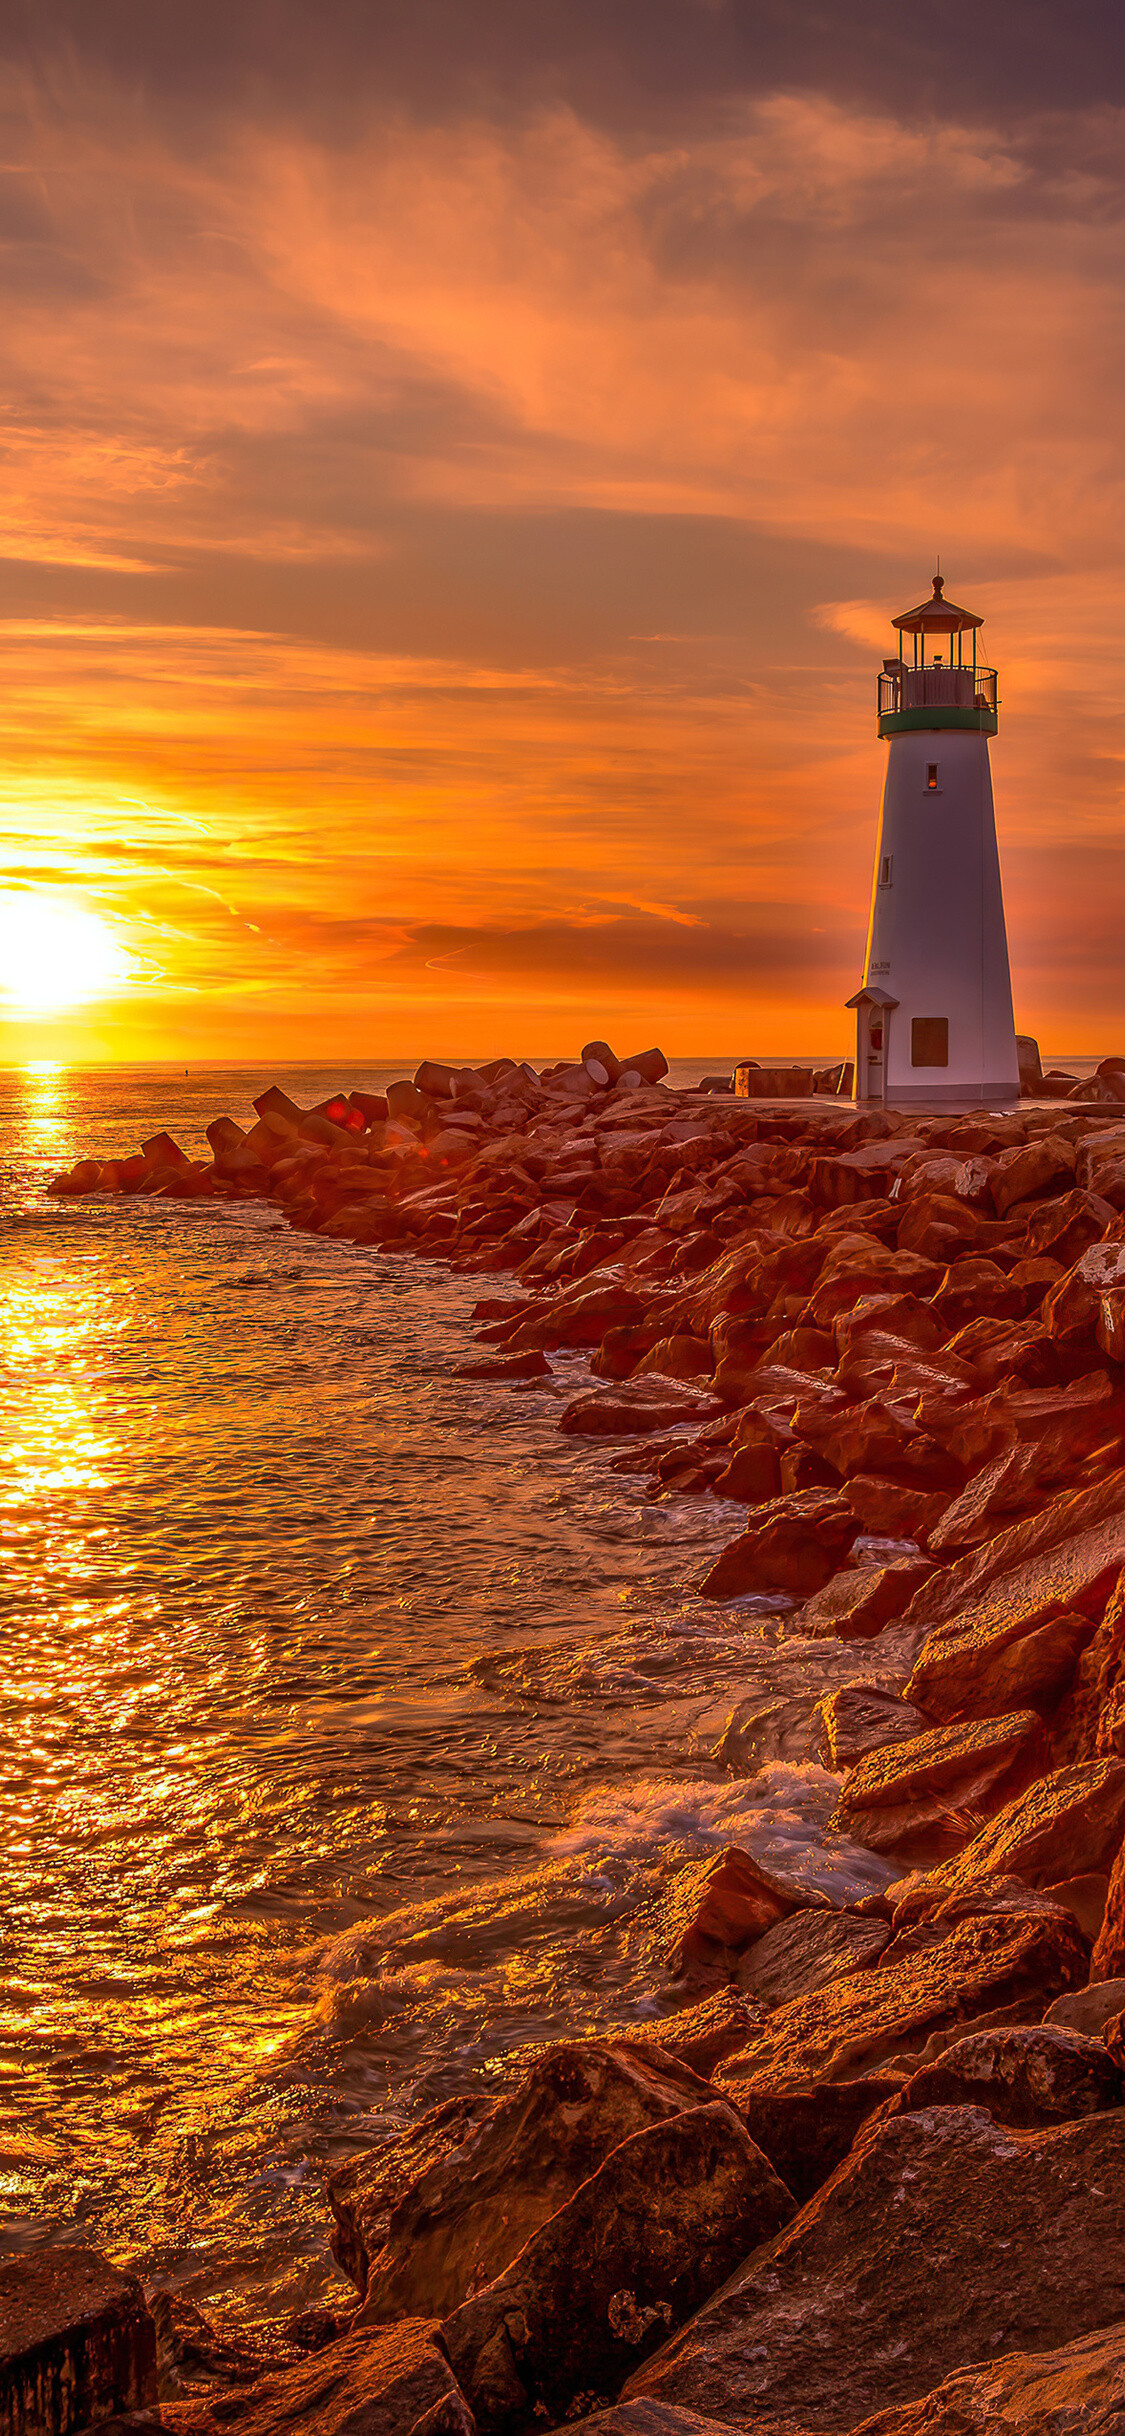 Sunset: The evening twilight, Lighthouse, Spectacular maritime scenery. 1130x2440 HD Background.